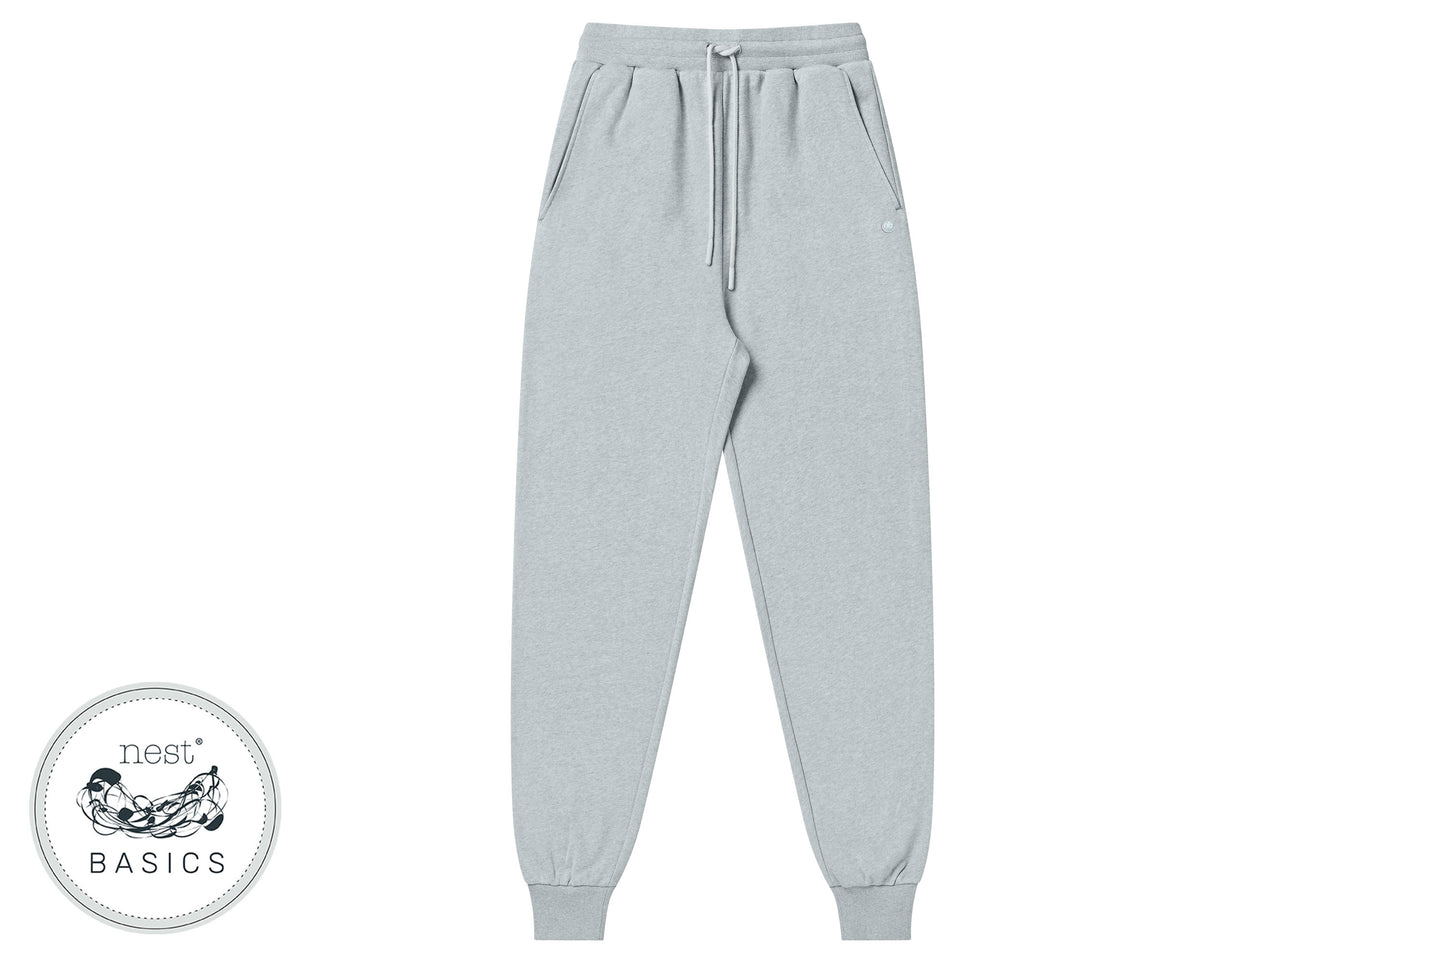 Men's Basics Relaxed Fit Sweatpants (Organic Terry) - Cloudburst Light